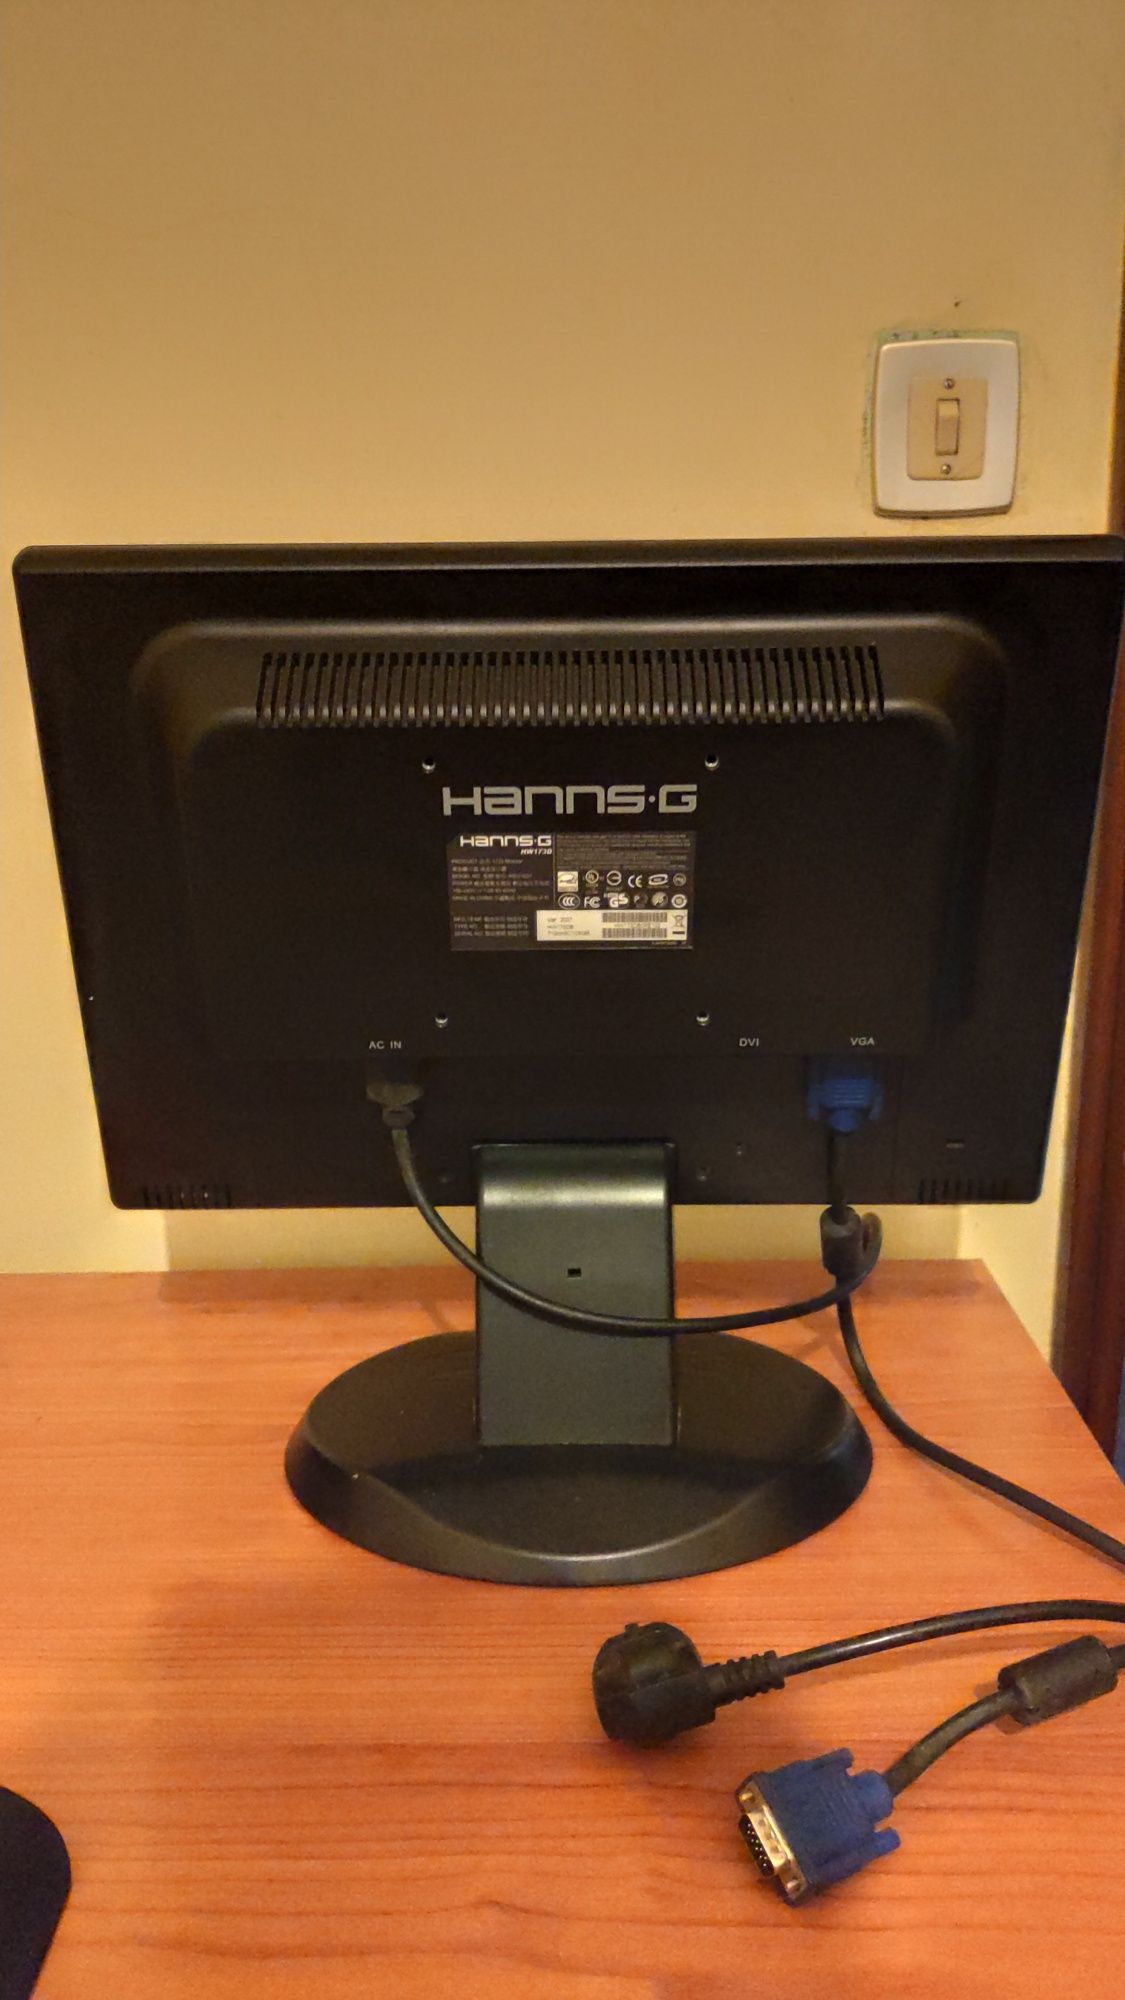 Monitor de computador